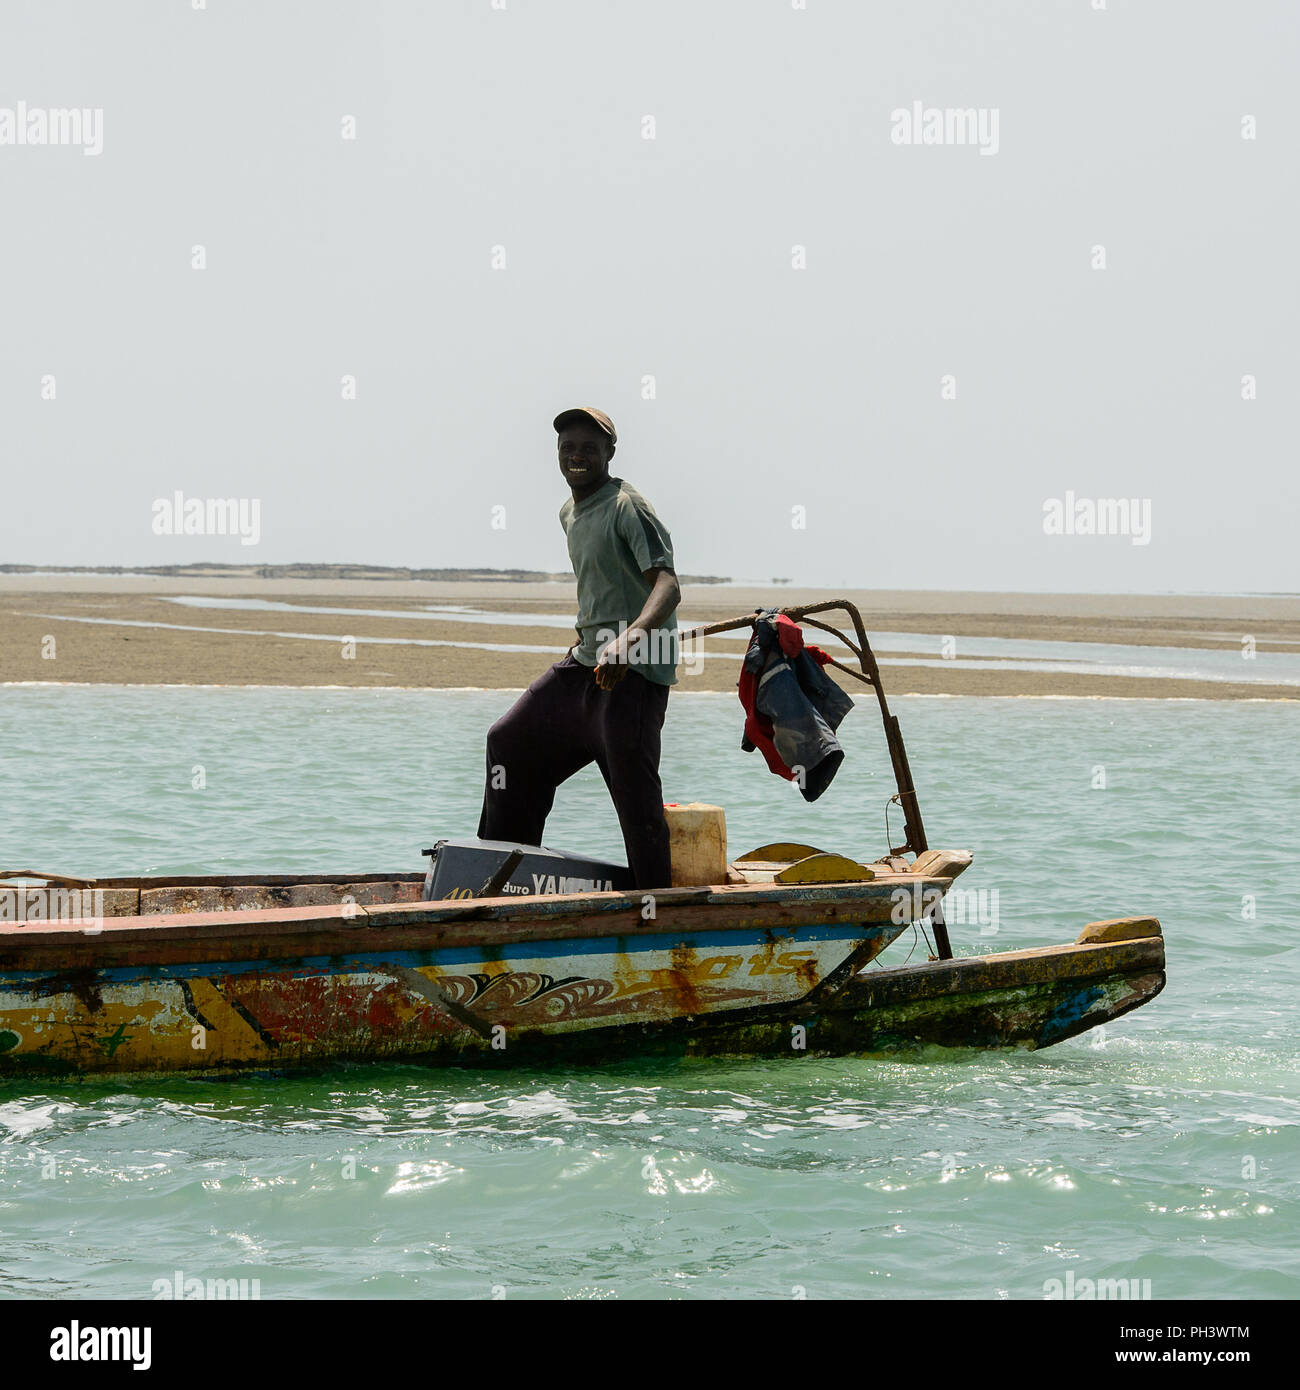 ORANGO ISLAND, GUINEA BISSAU - MAY 3, 2017: Unidentified local man sails in a boat on the Orango Island, Guinea Bissau Stock Photo